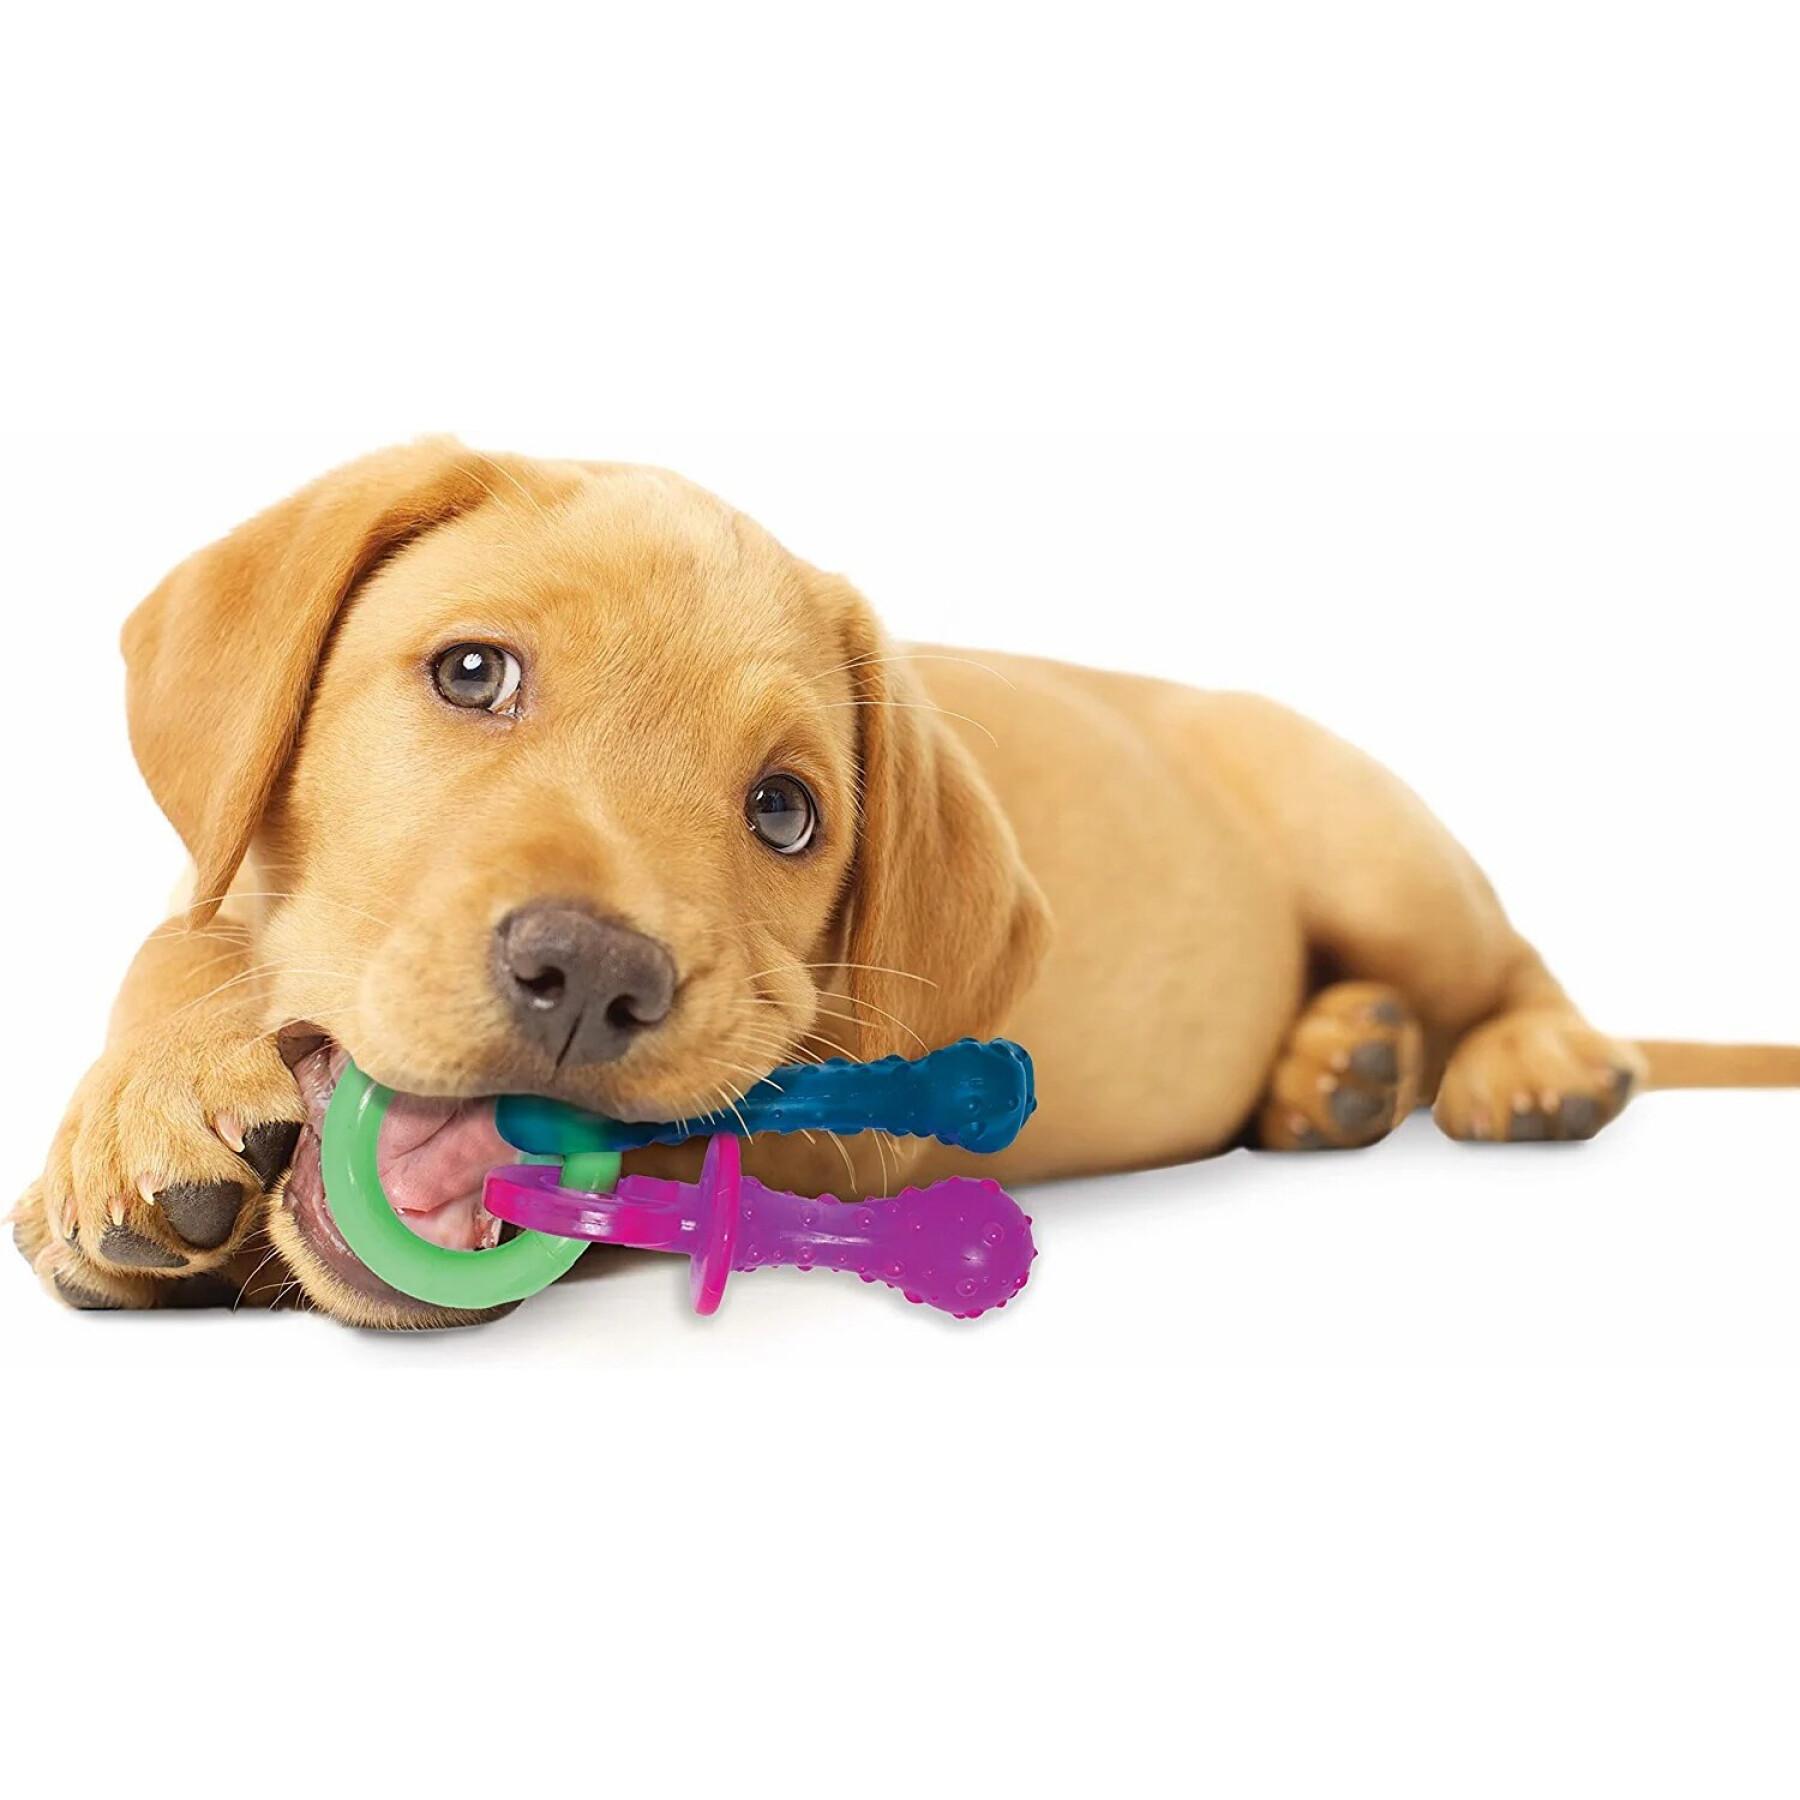 Brinquedo de cão Nylabone Puppy Teething Pacifier - Bacon XS